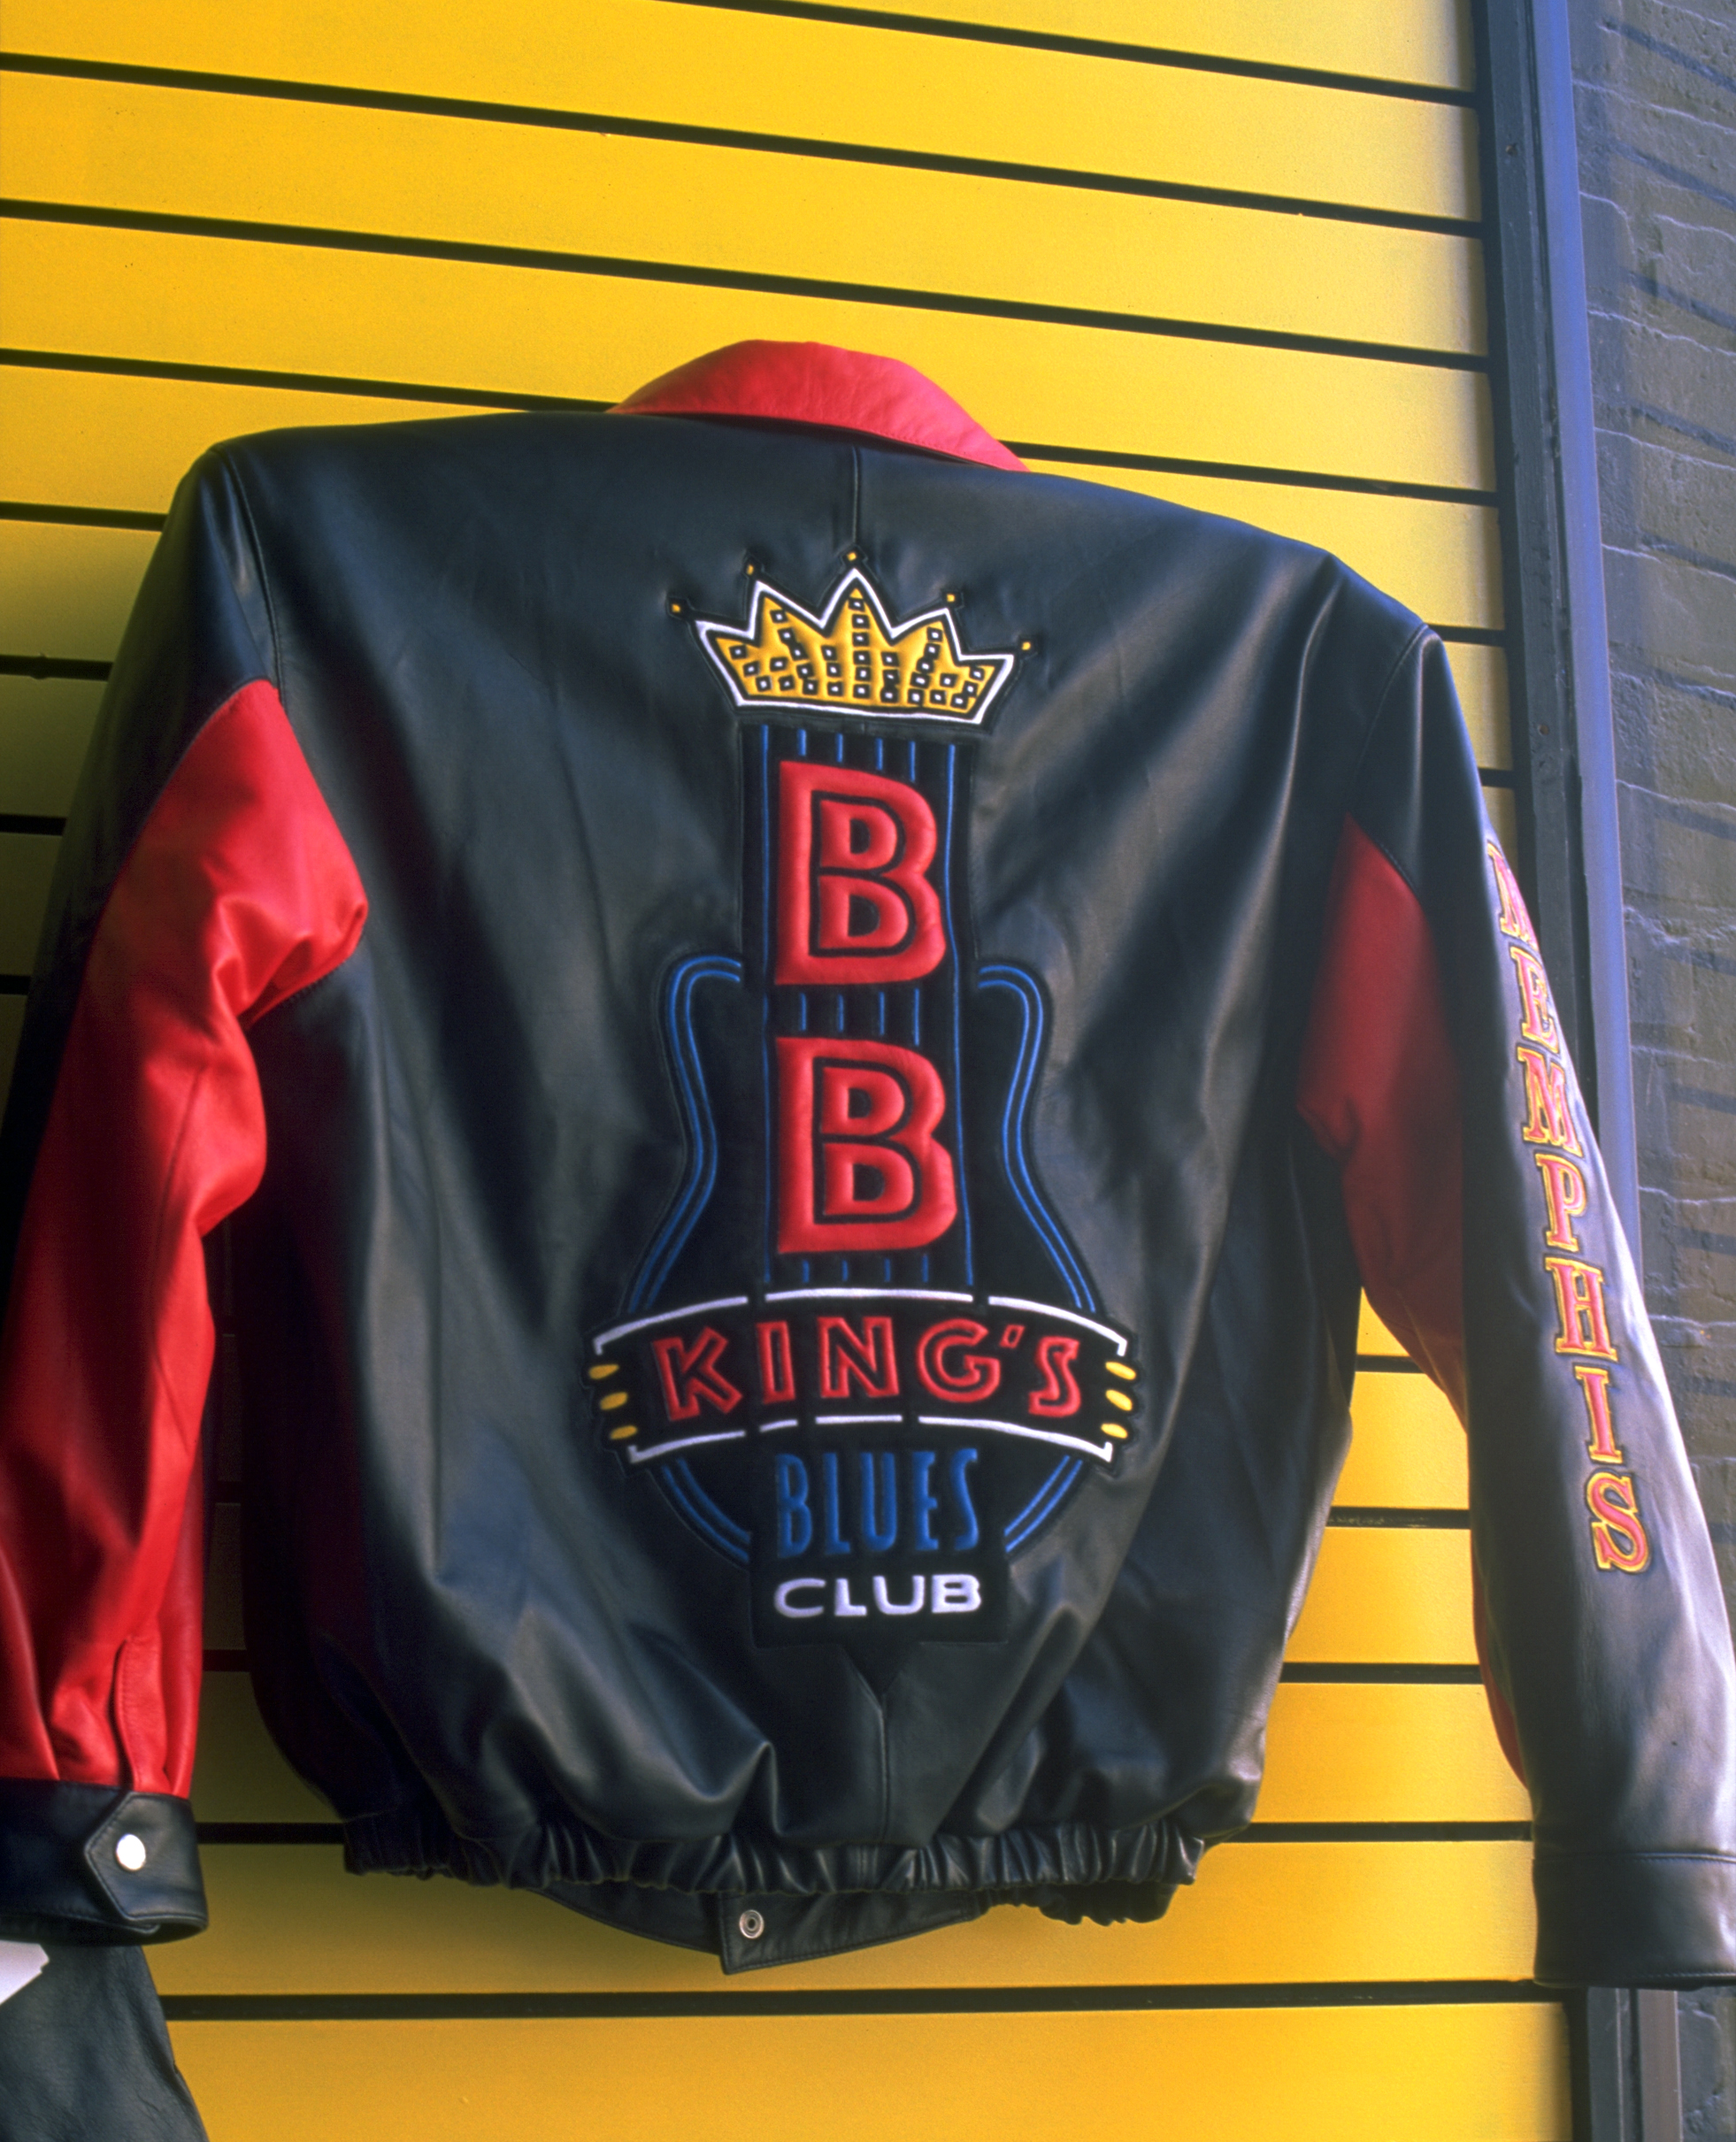  BB King’s Blues Club merchandise  Branding creative and design by Chuck Mitchell  Beale Street Memphis, TN 